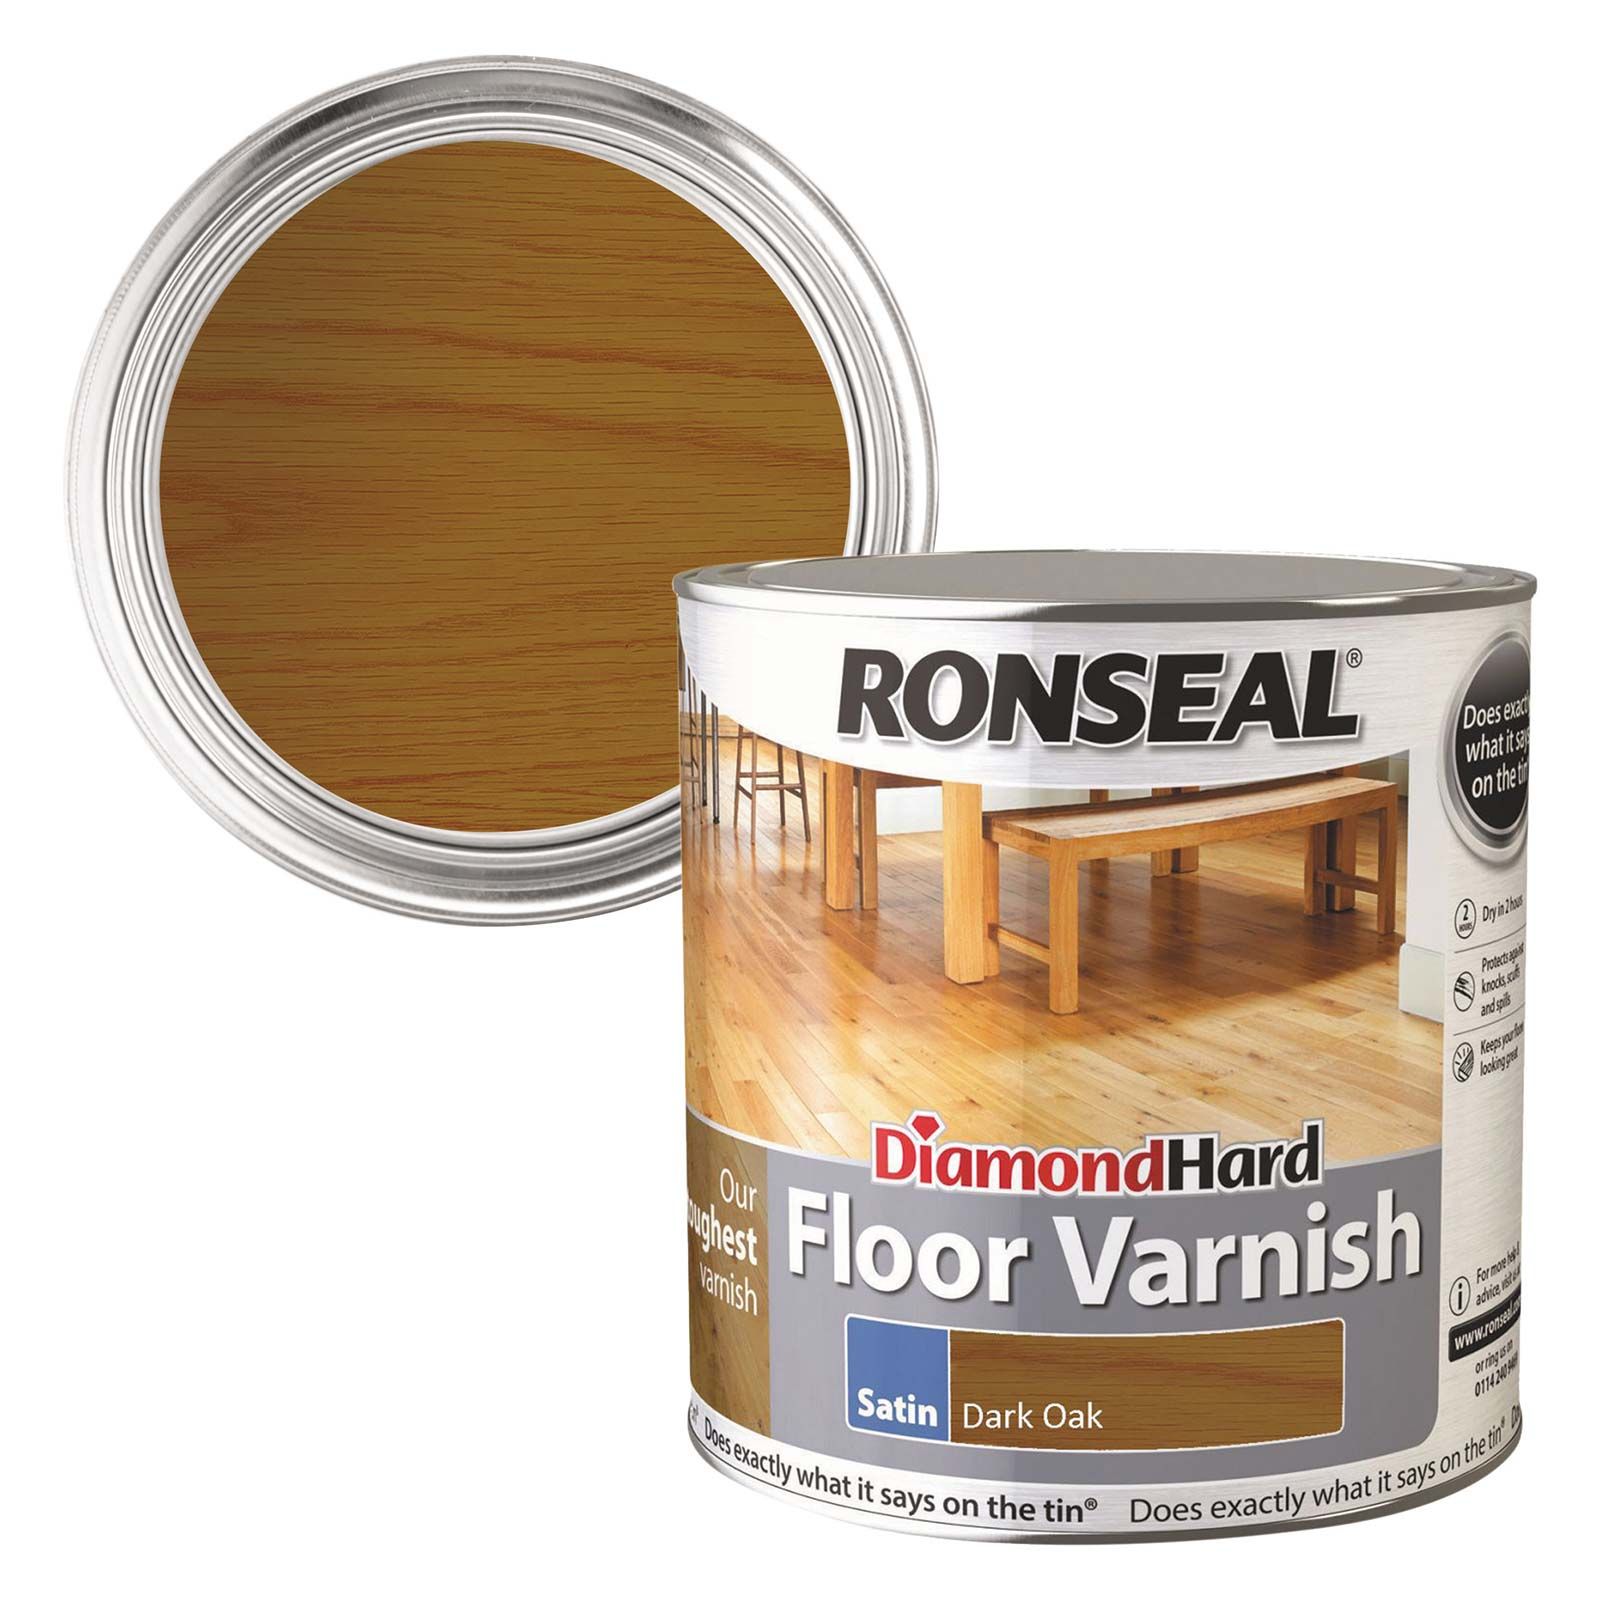 Ronseal Diamond Hard Floor Varnish Dark Oak Satin 2 5ltr Selco